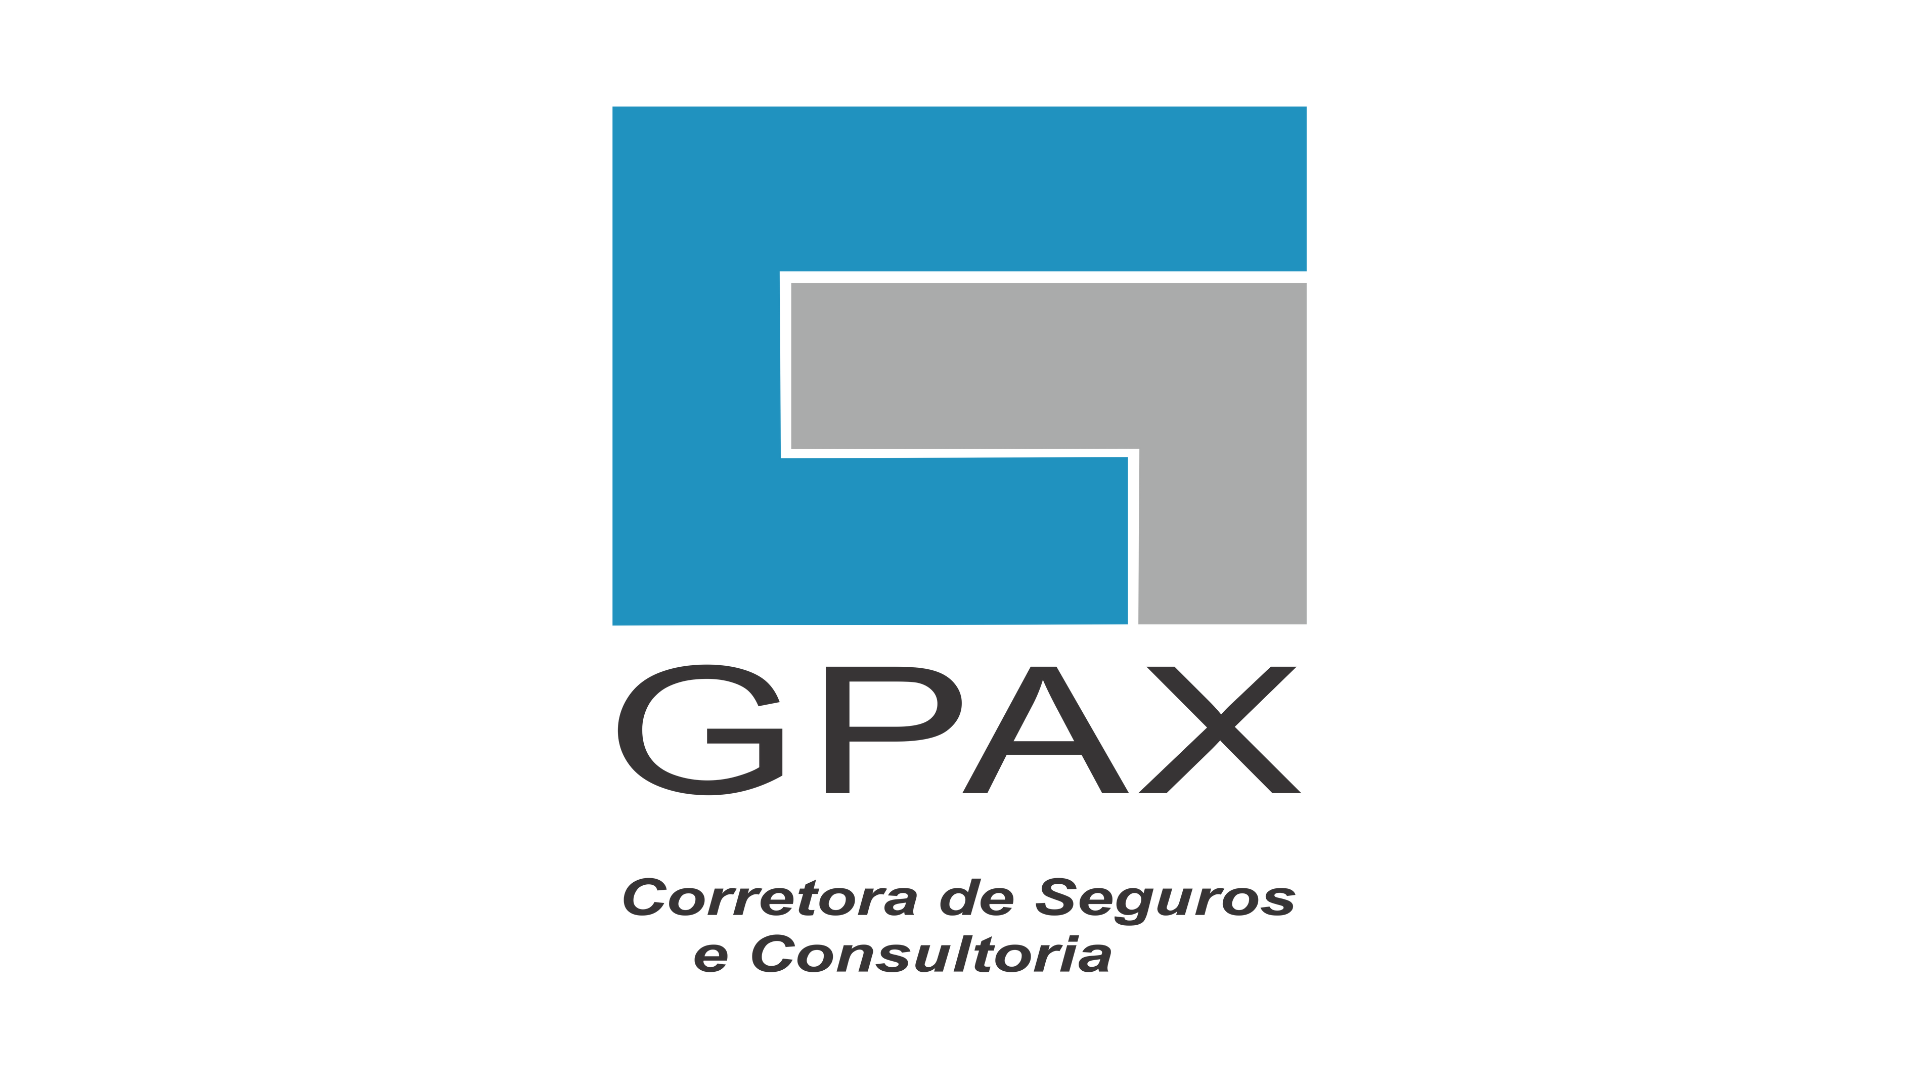 GPAX Corretora de Seguros